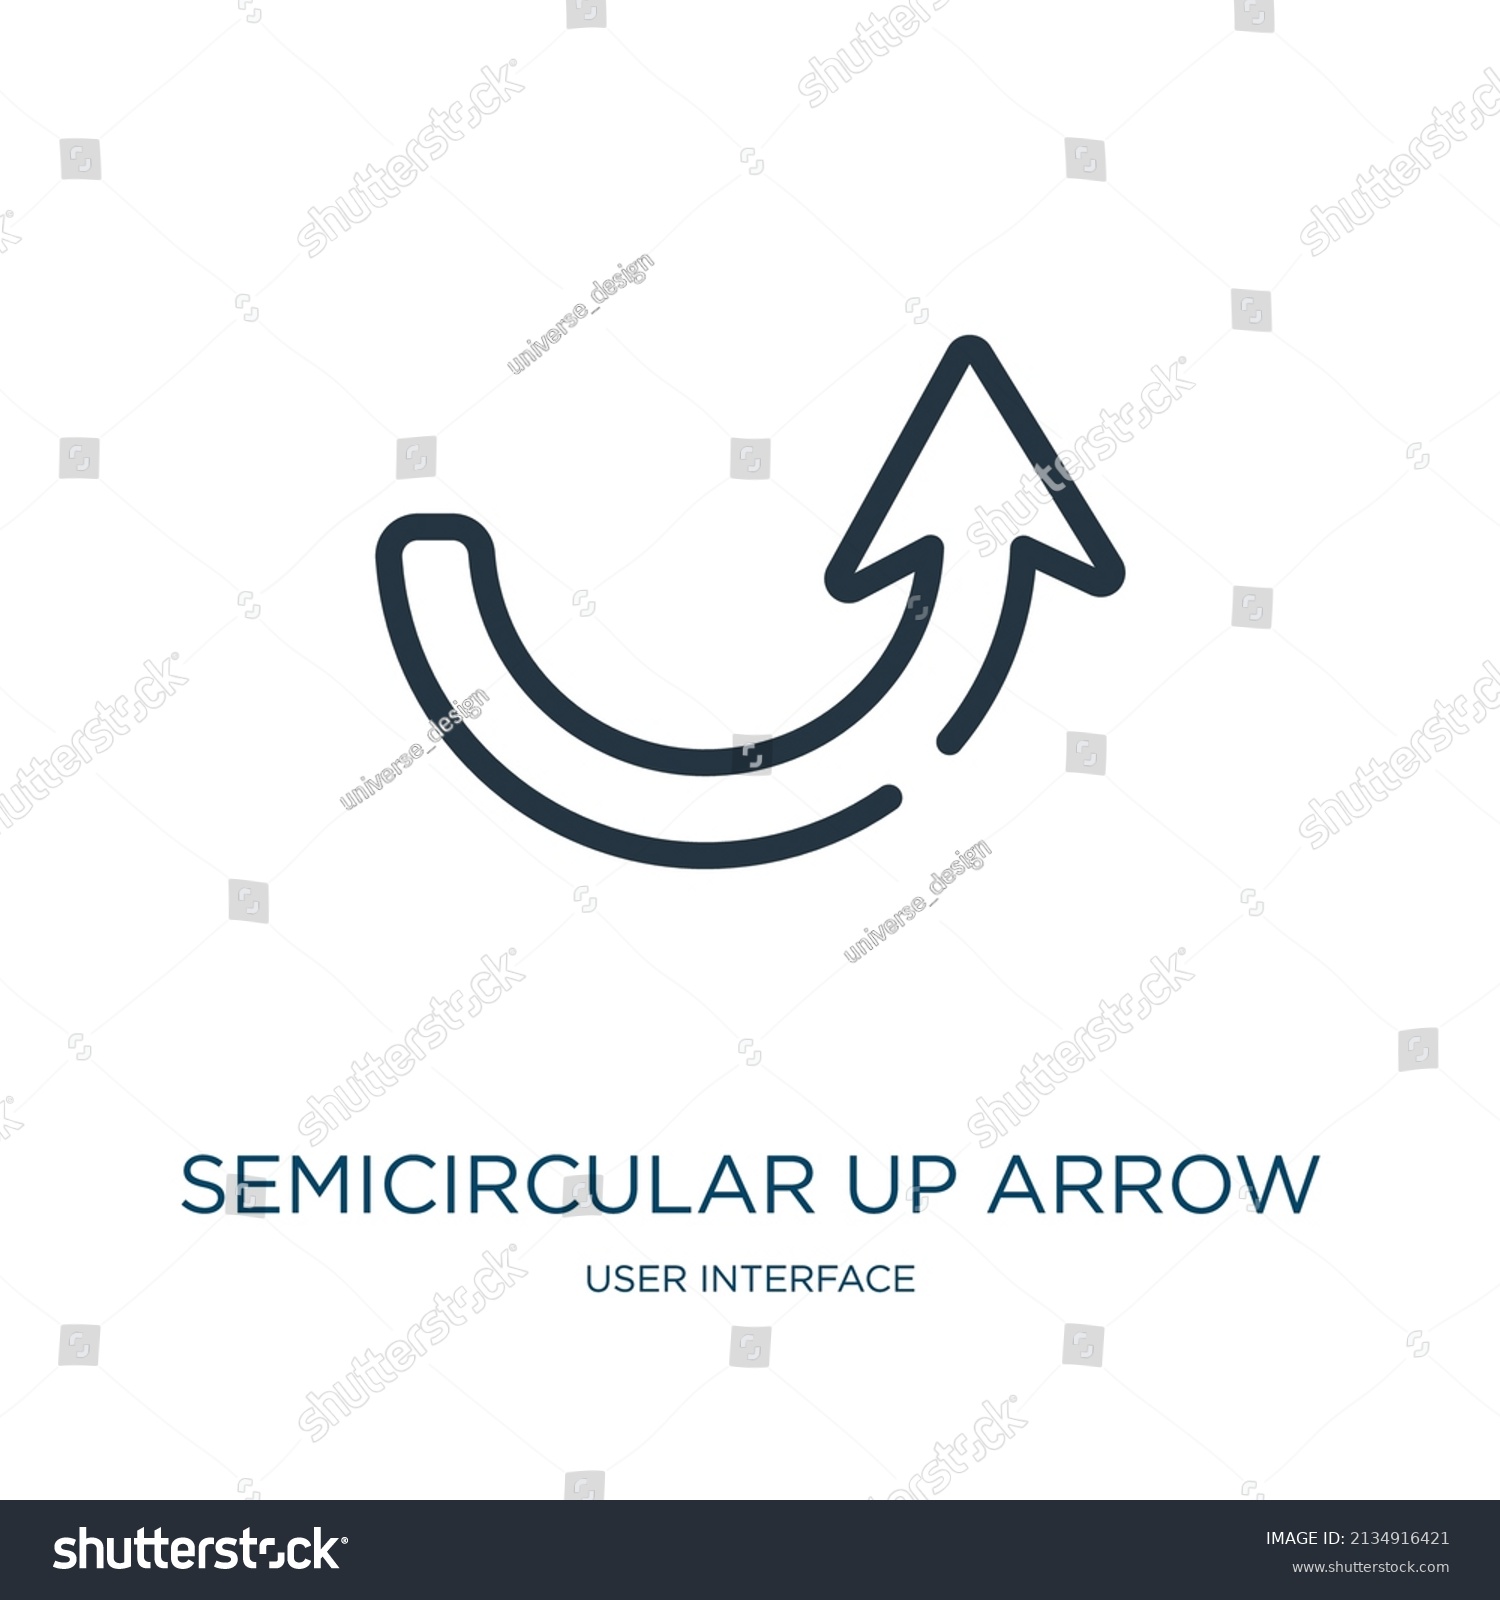 Semicircular Arrow Thin Line Icon Arrow Stock Vector Royalty Free Shutterstock